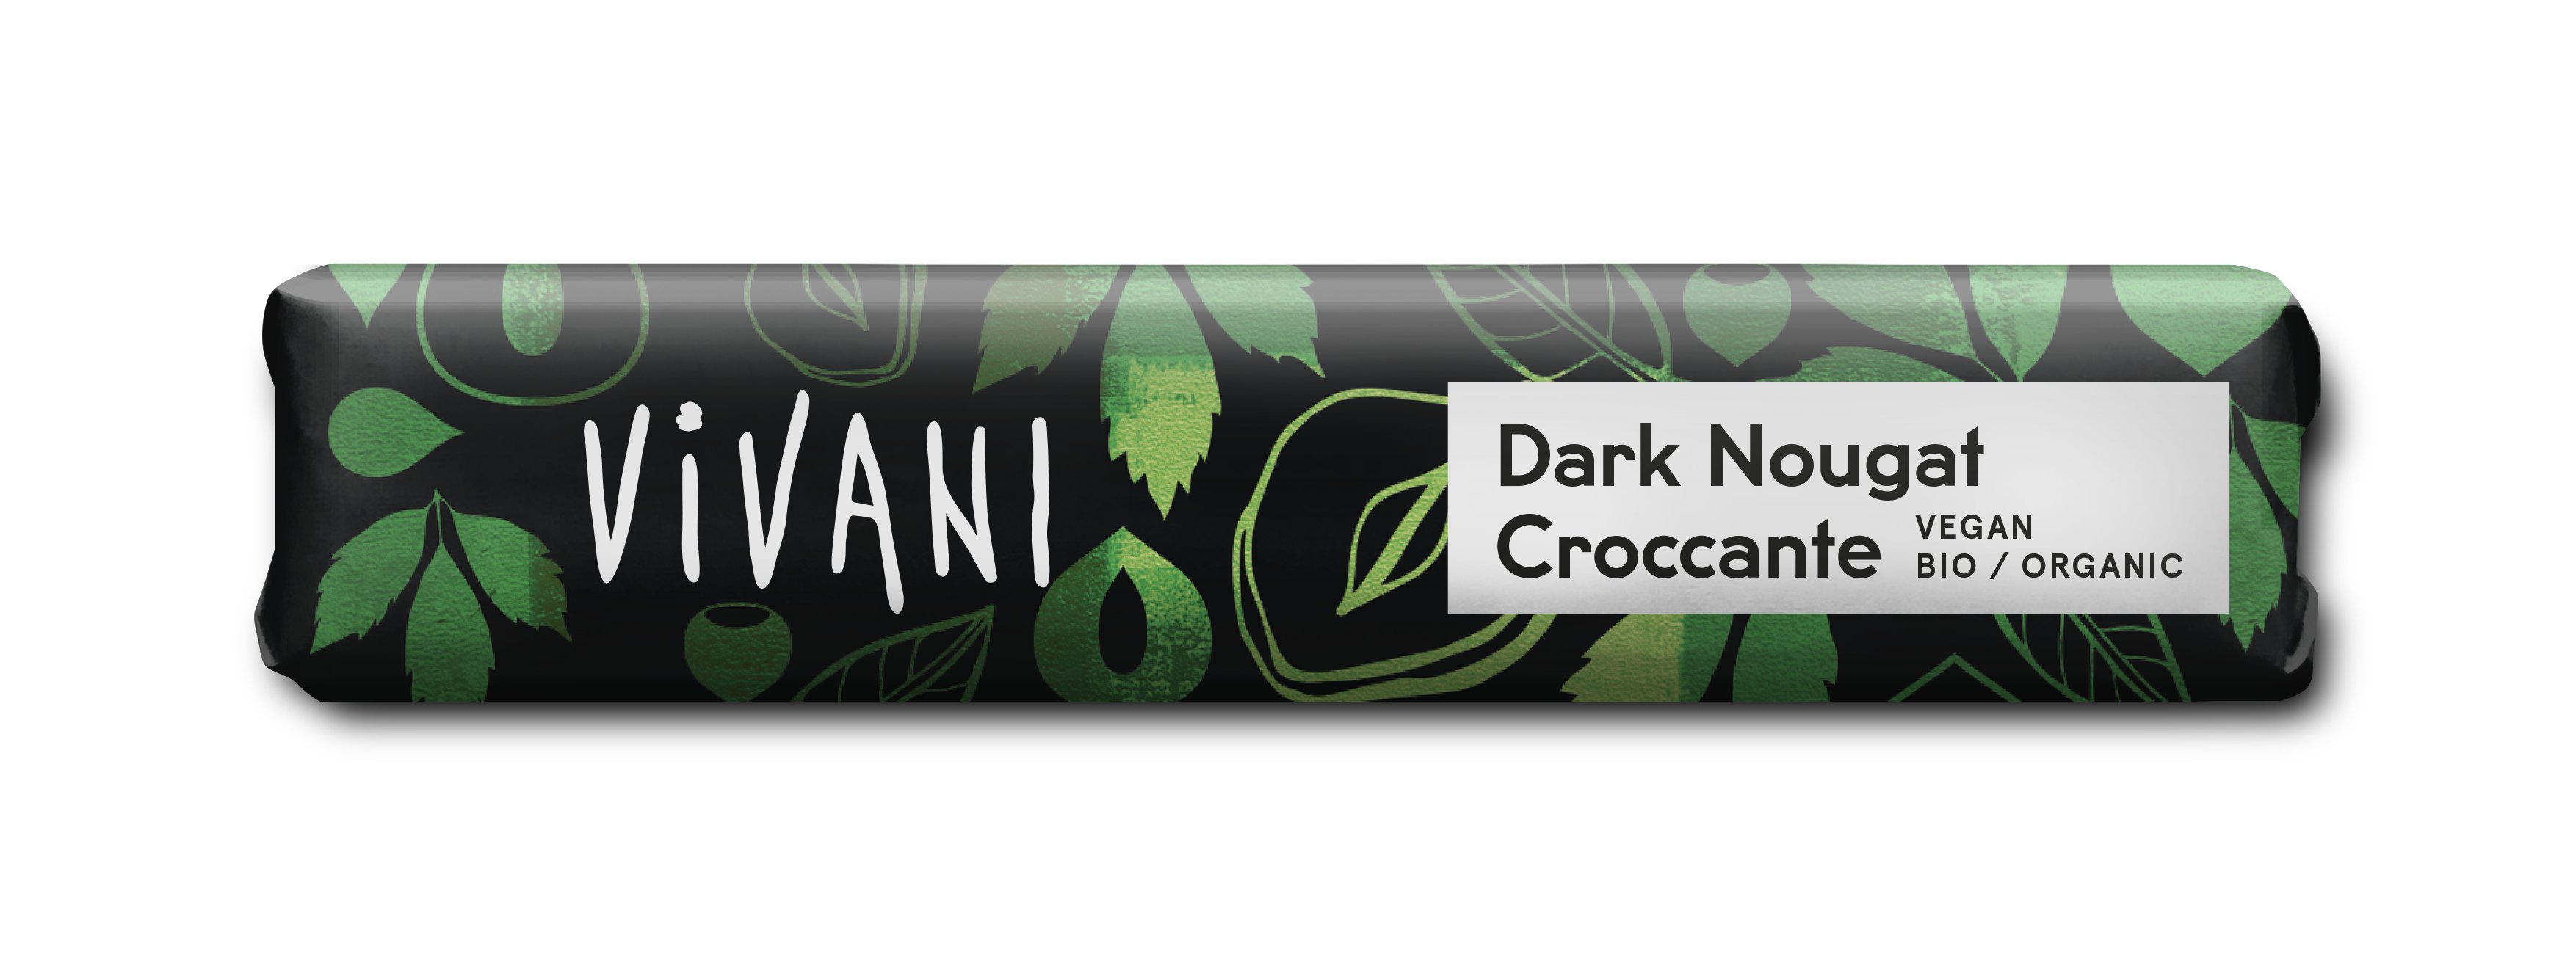 Vivani Dark Nougat Croccante 35 g